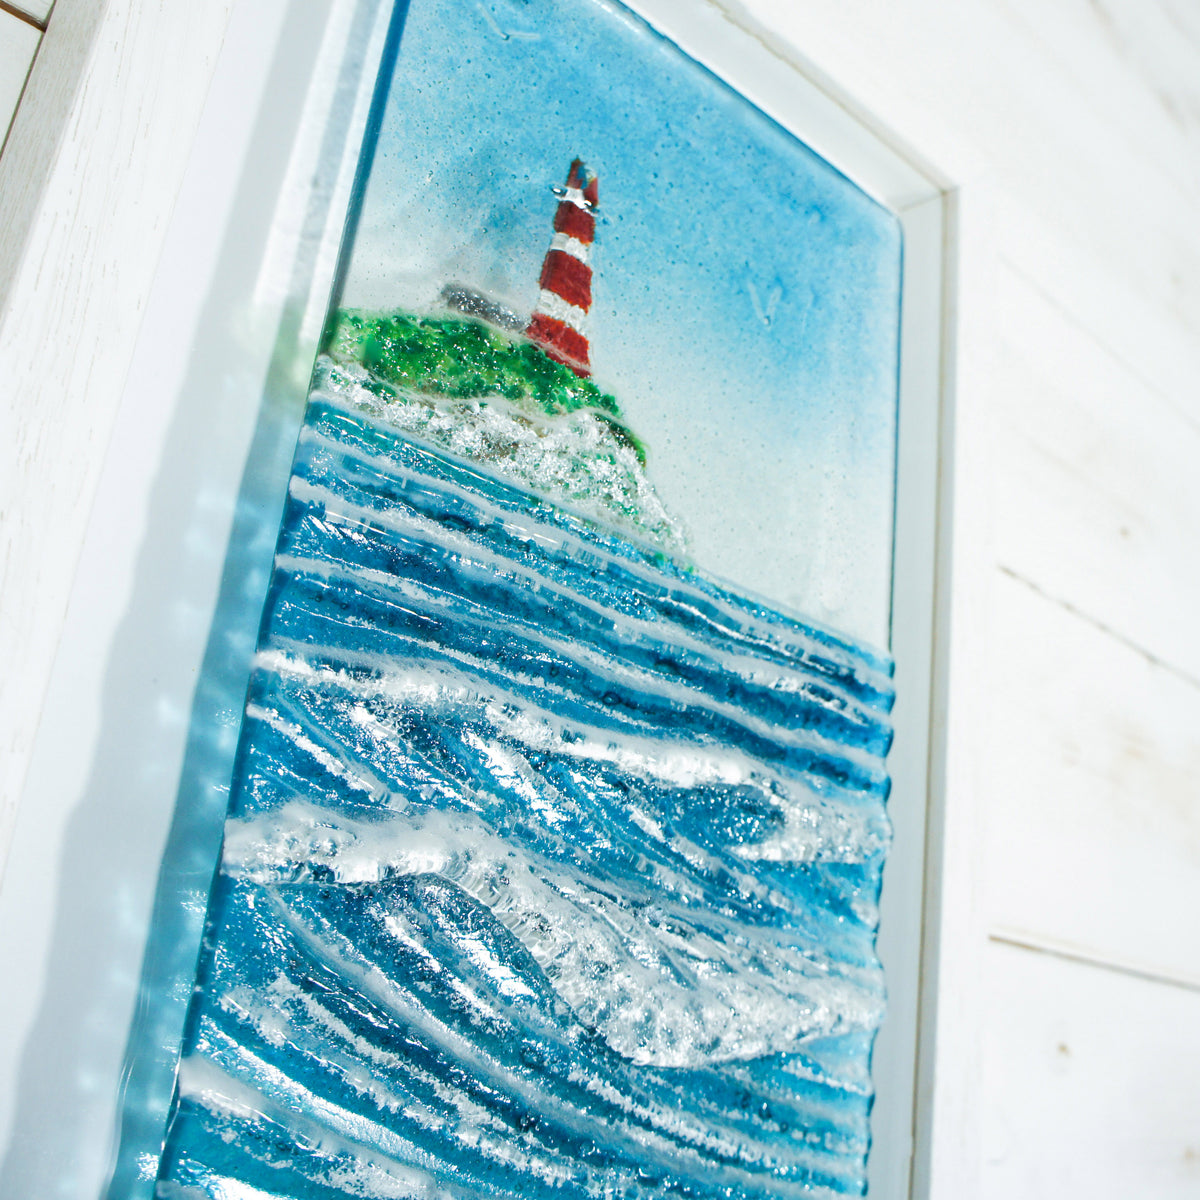 Medium Lighthouse Frame - Portrait